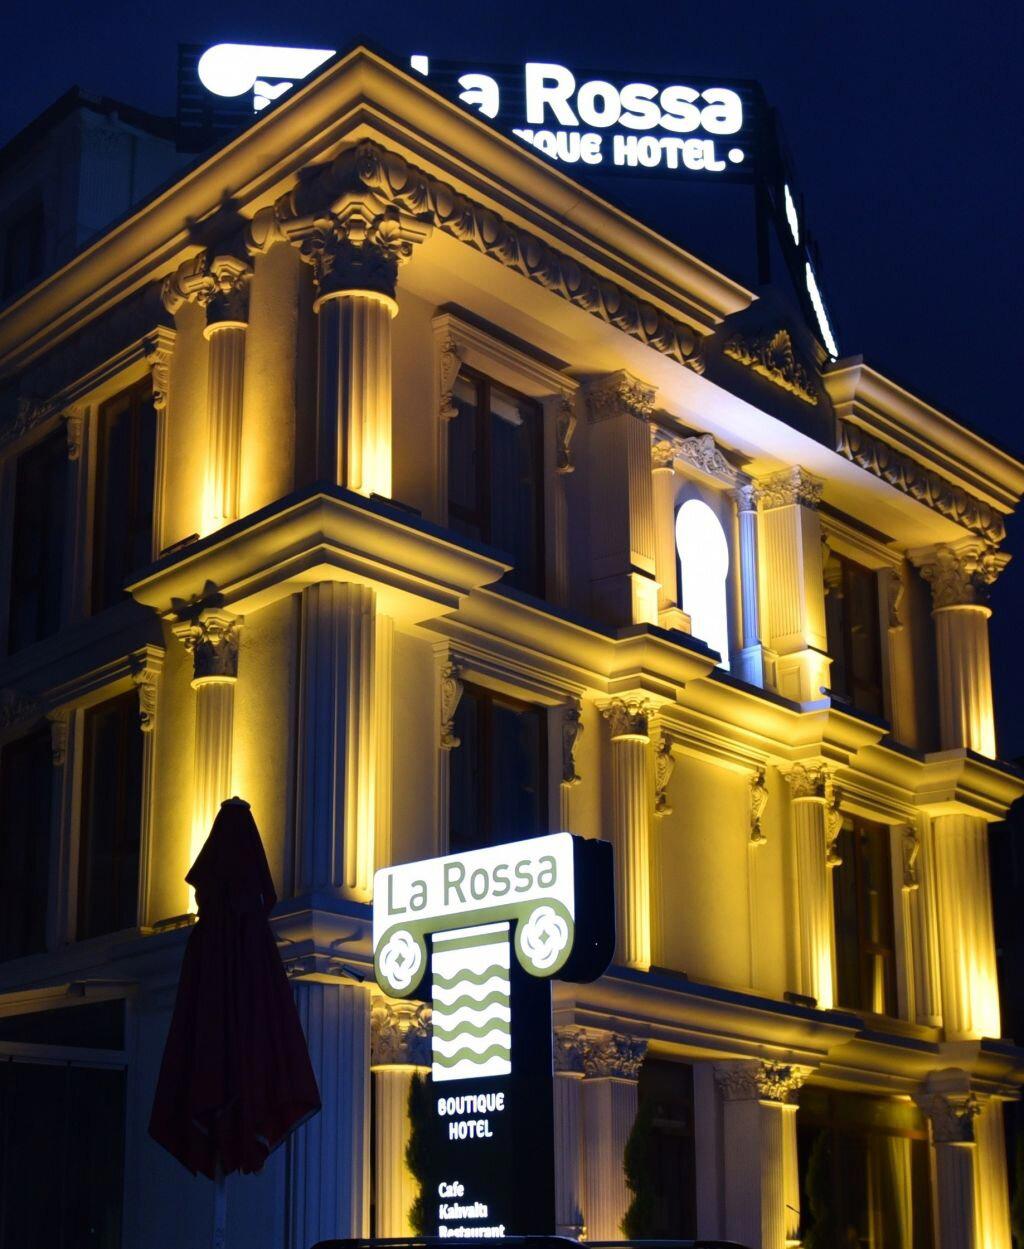 The Larossa Hotel